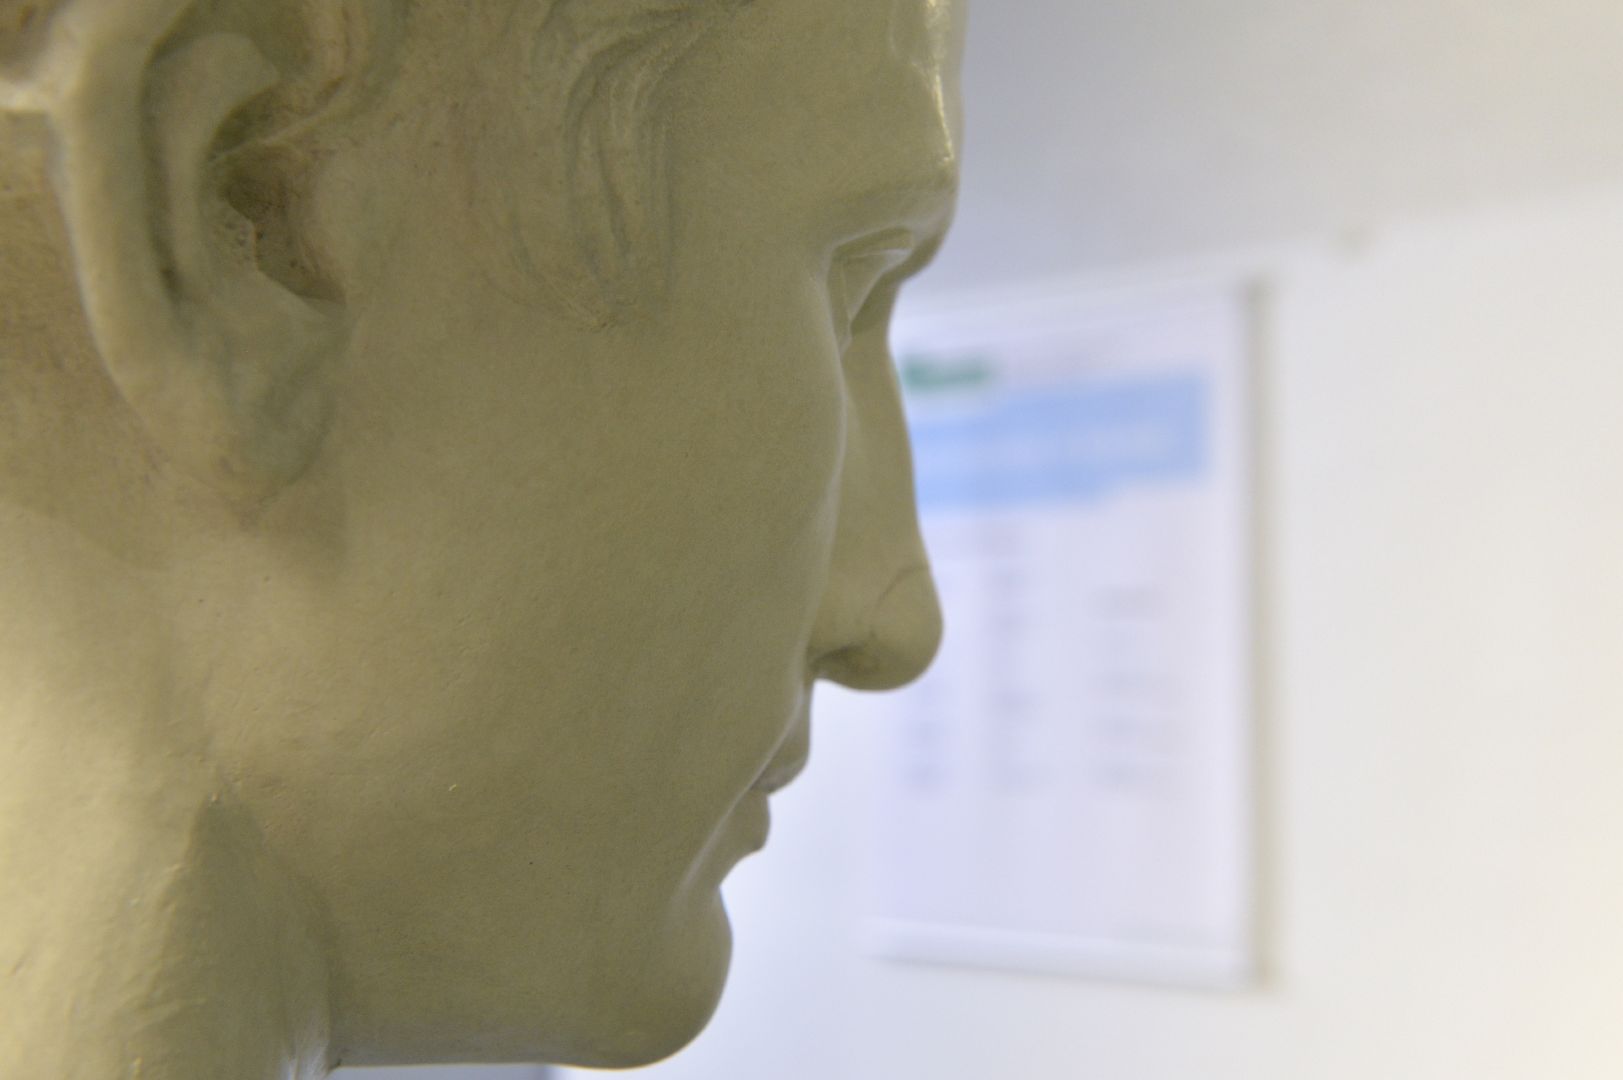 Profile of a human sculpture